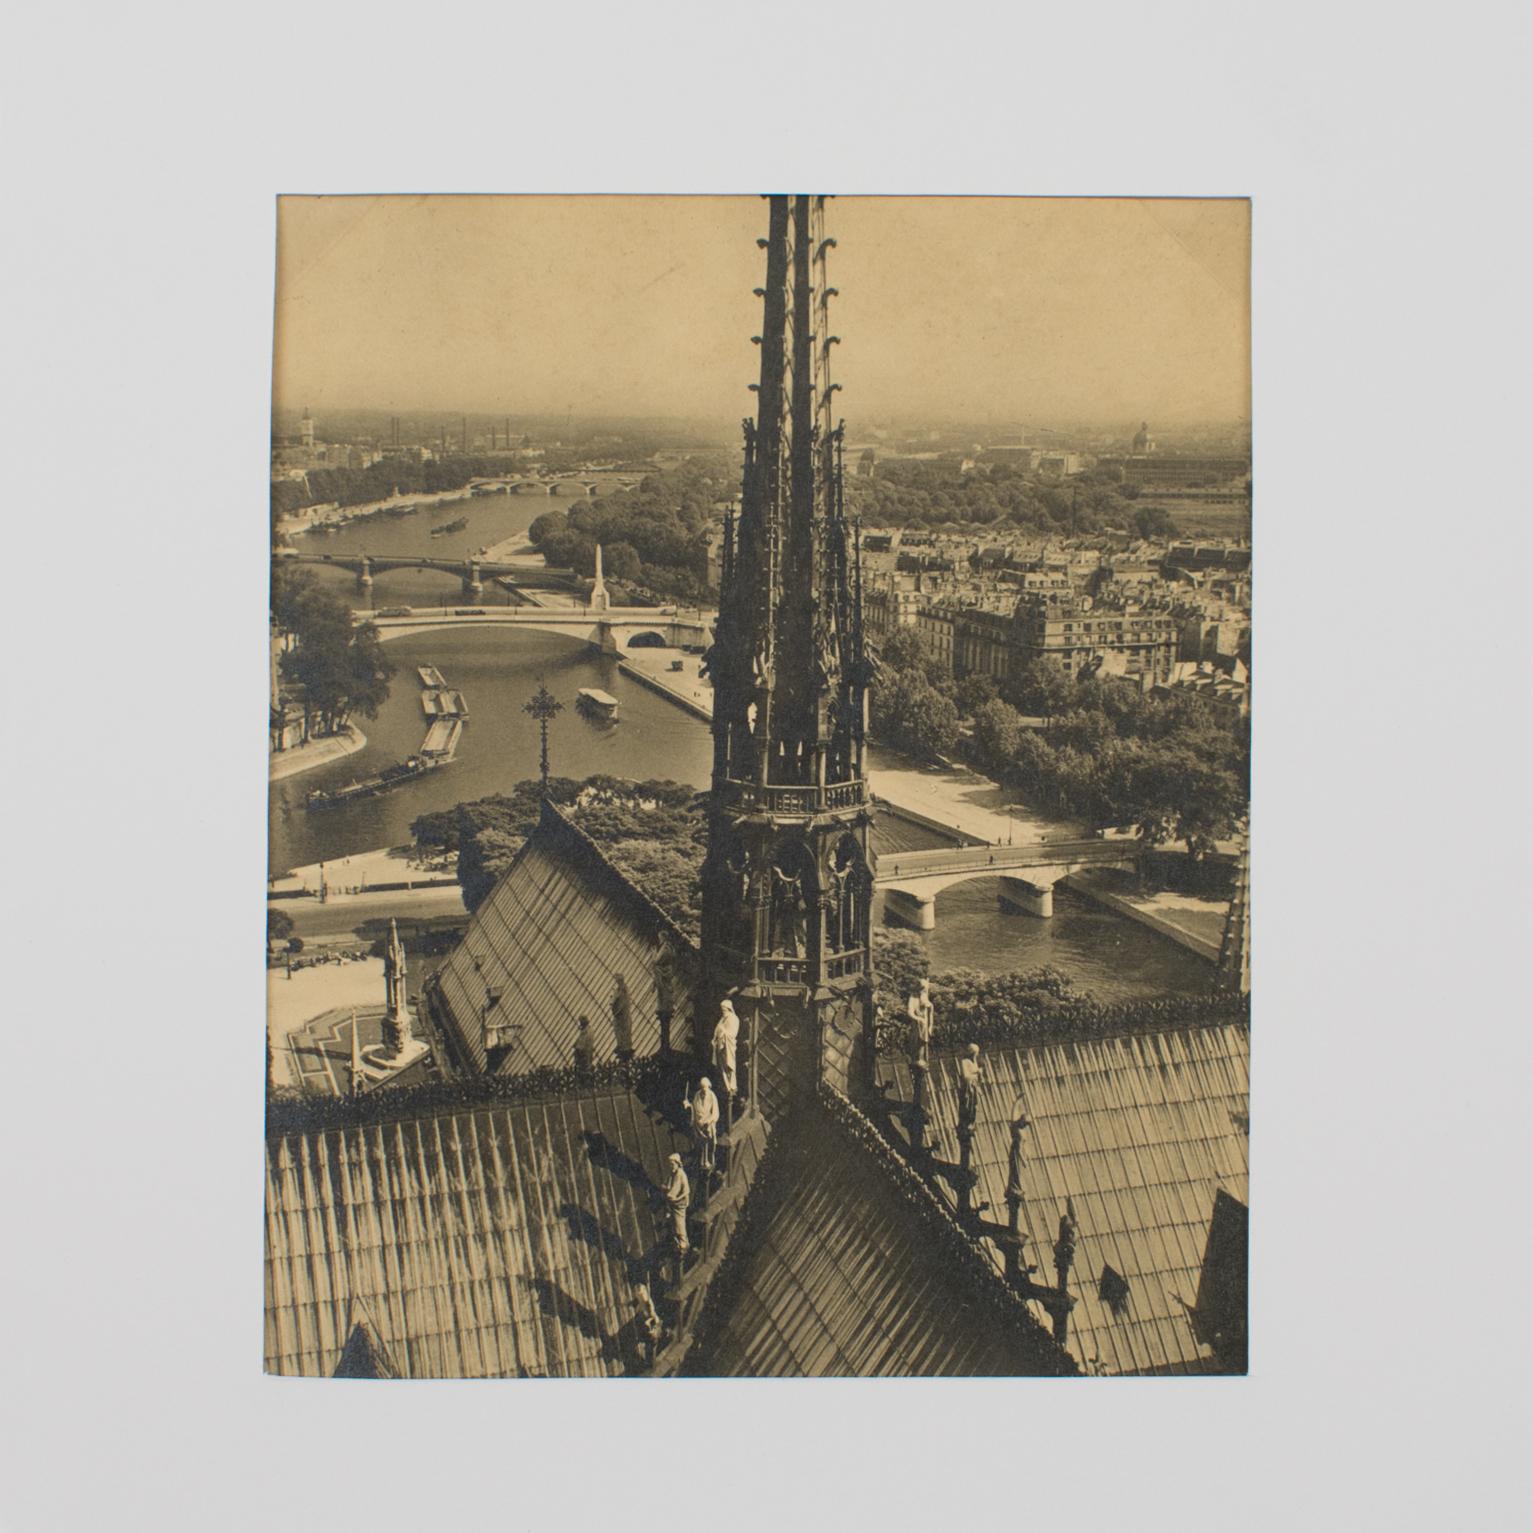 An original silver gelatin black and white photography postcard by Albert Monier, Paris. Notre Dame Cathedral circa 1950.
Features:
The original silver gelatin print photograph postcard is unframed.
Photographer: Albert Monier (1915 - 1998).
Title: